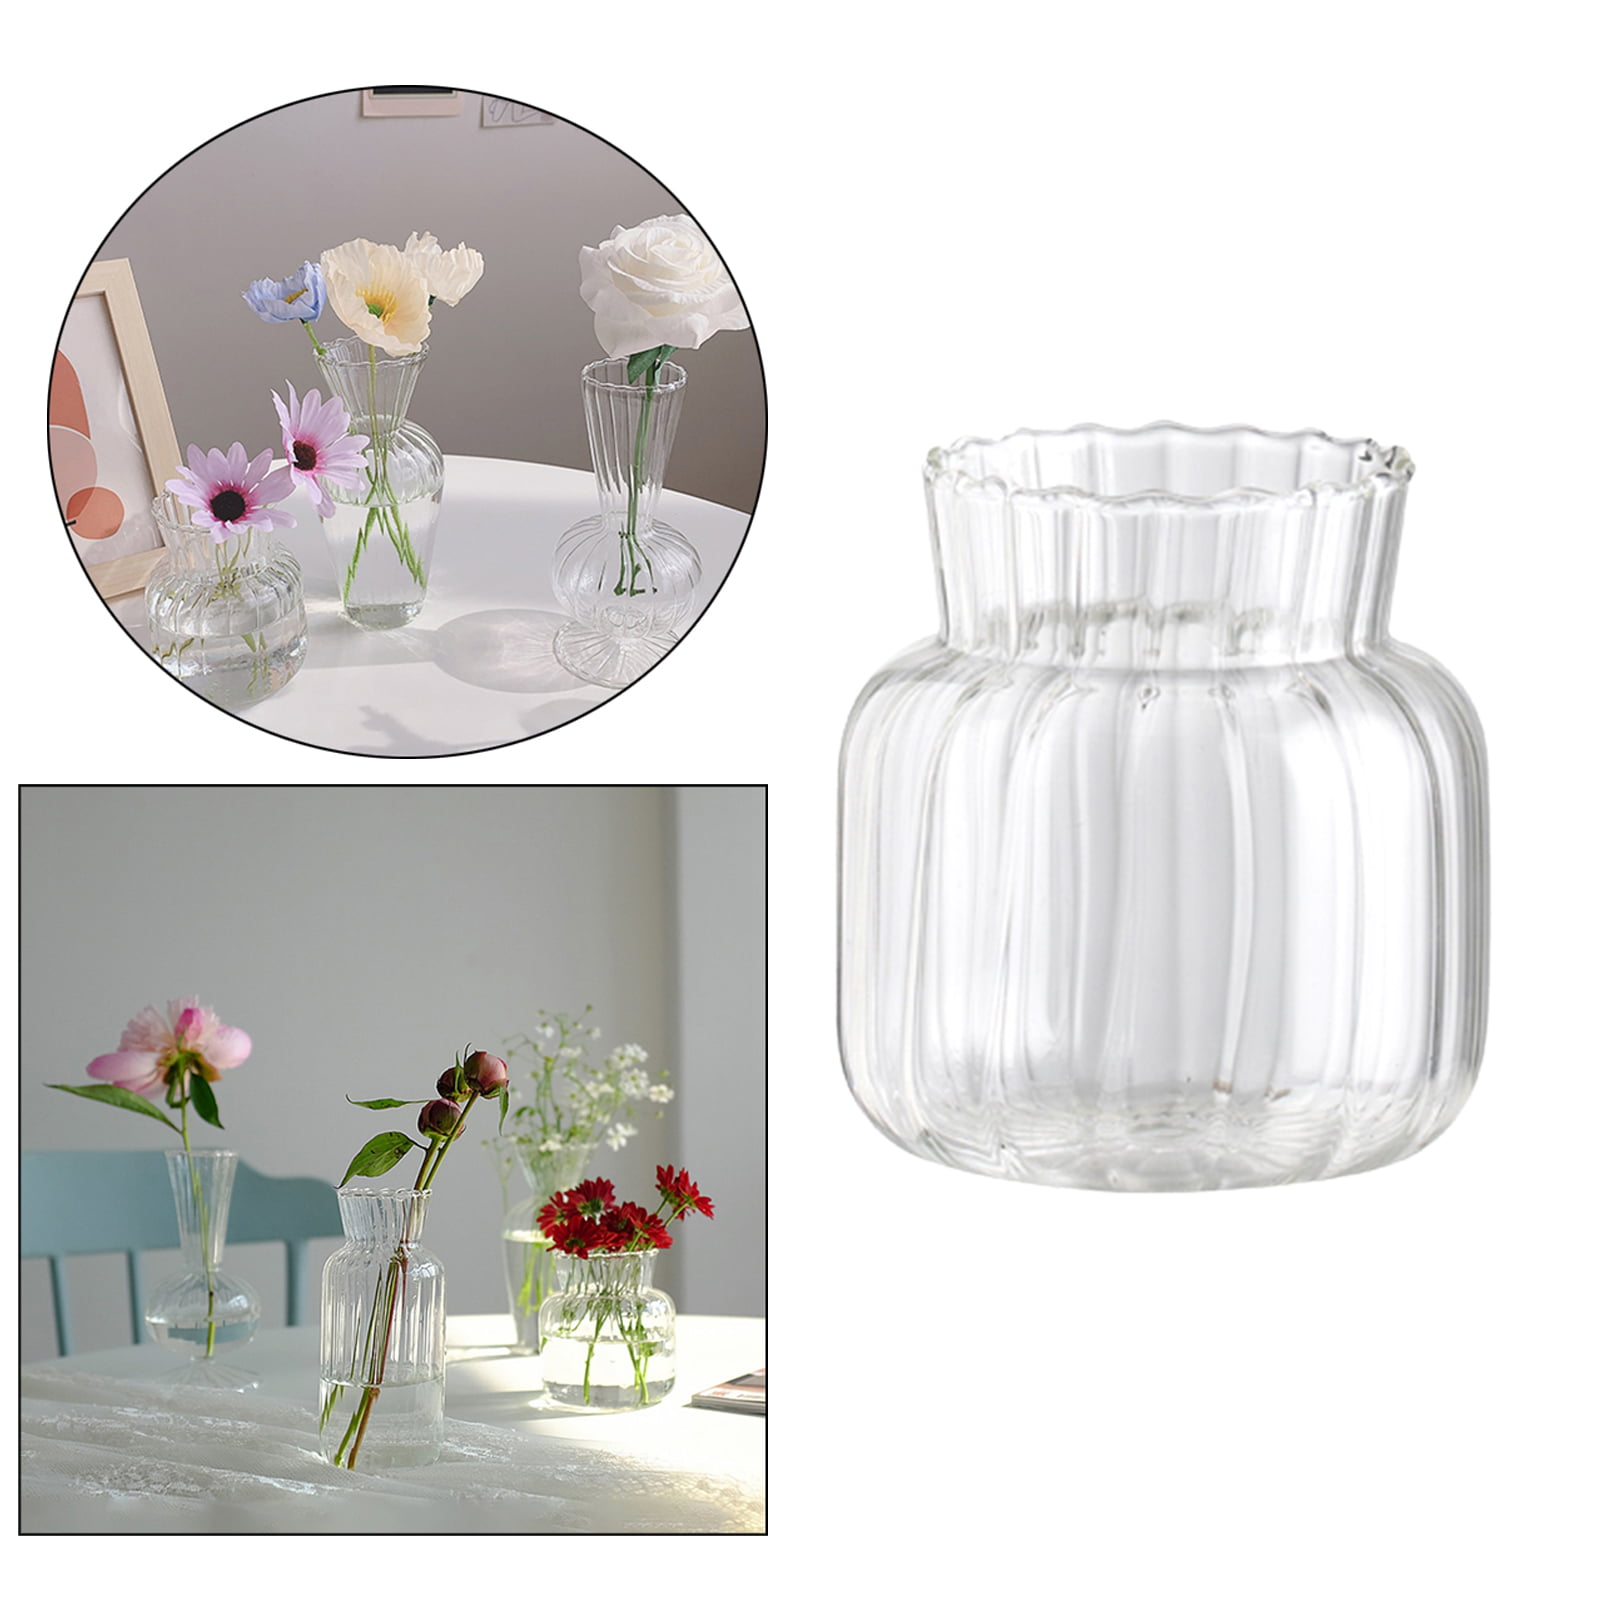 FLAMEER 2X Nordic Ceramic Tabletop Flower Vase Standing Flower Vases Wedding Party Decor 